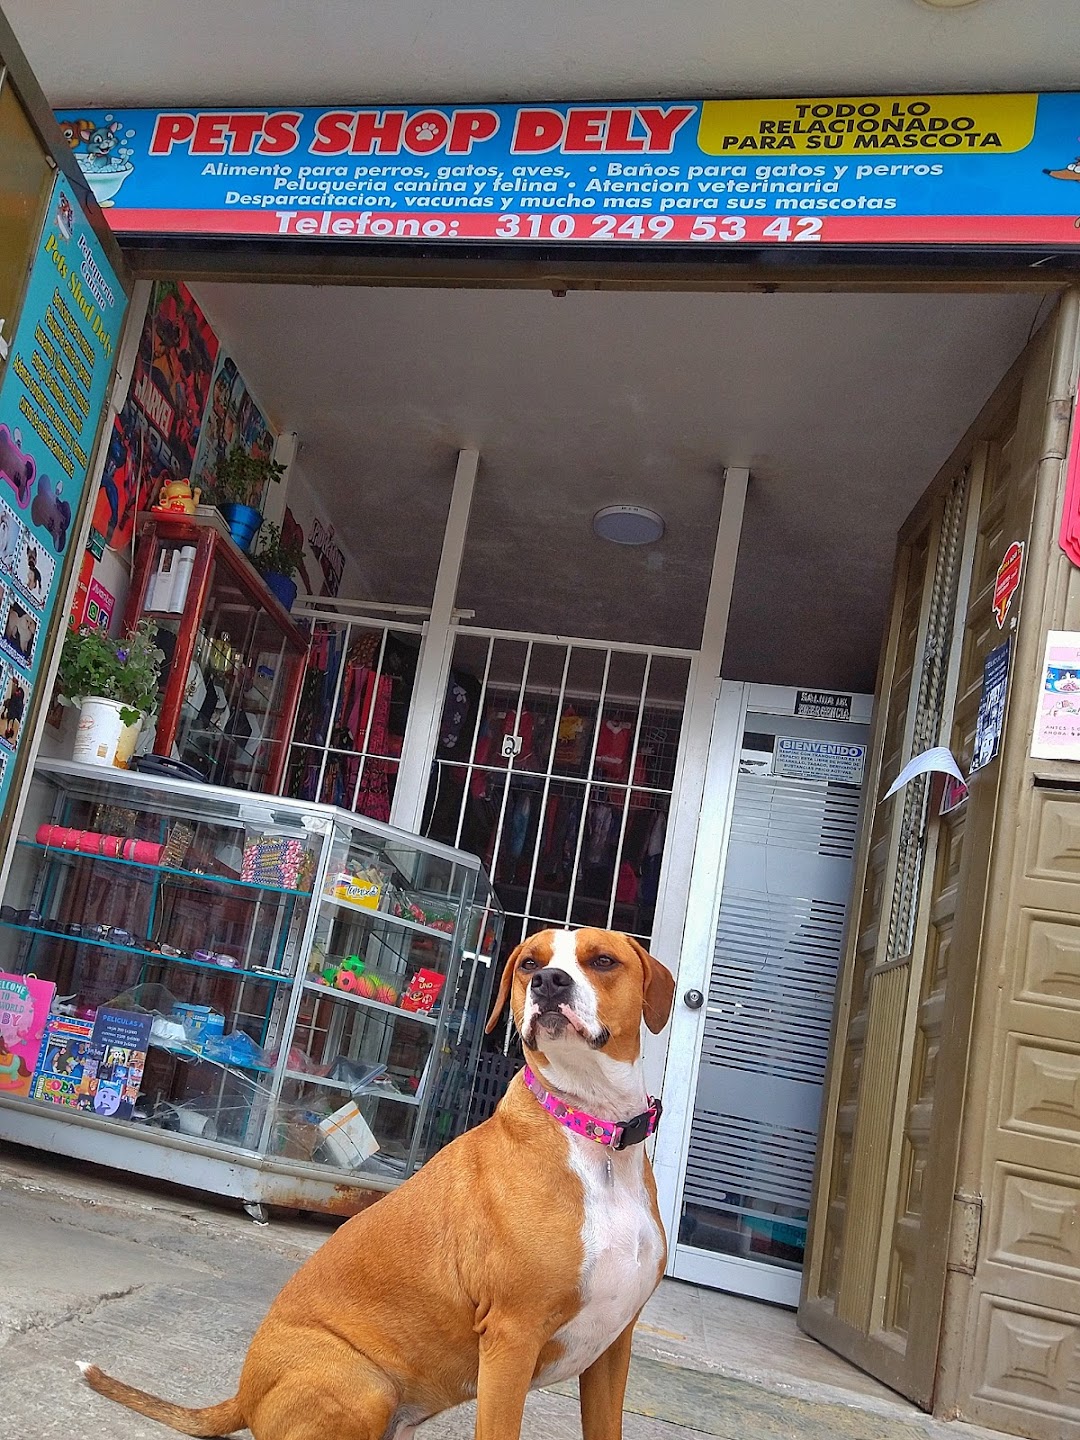 Pets shop keyla